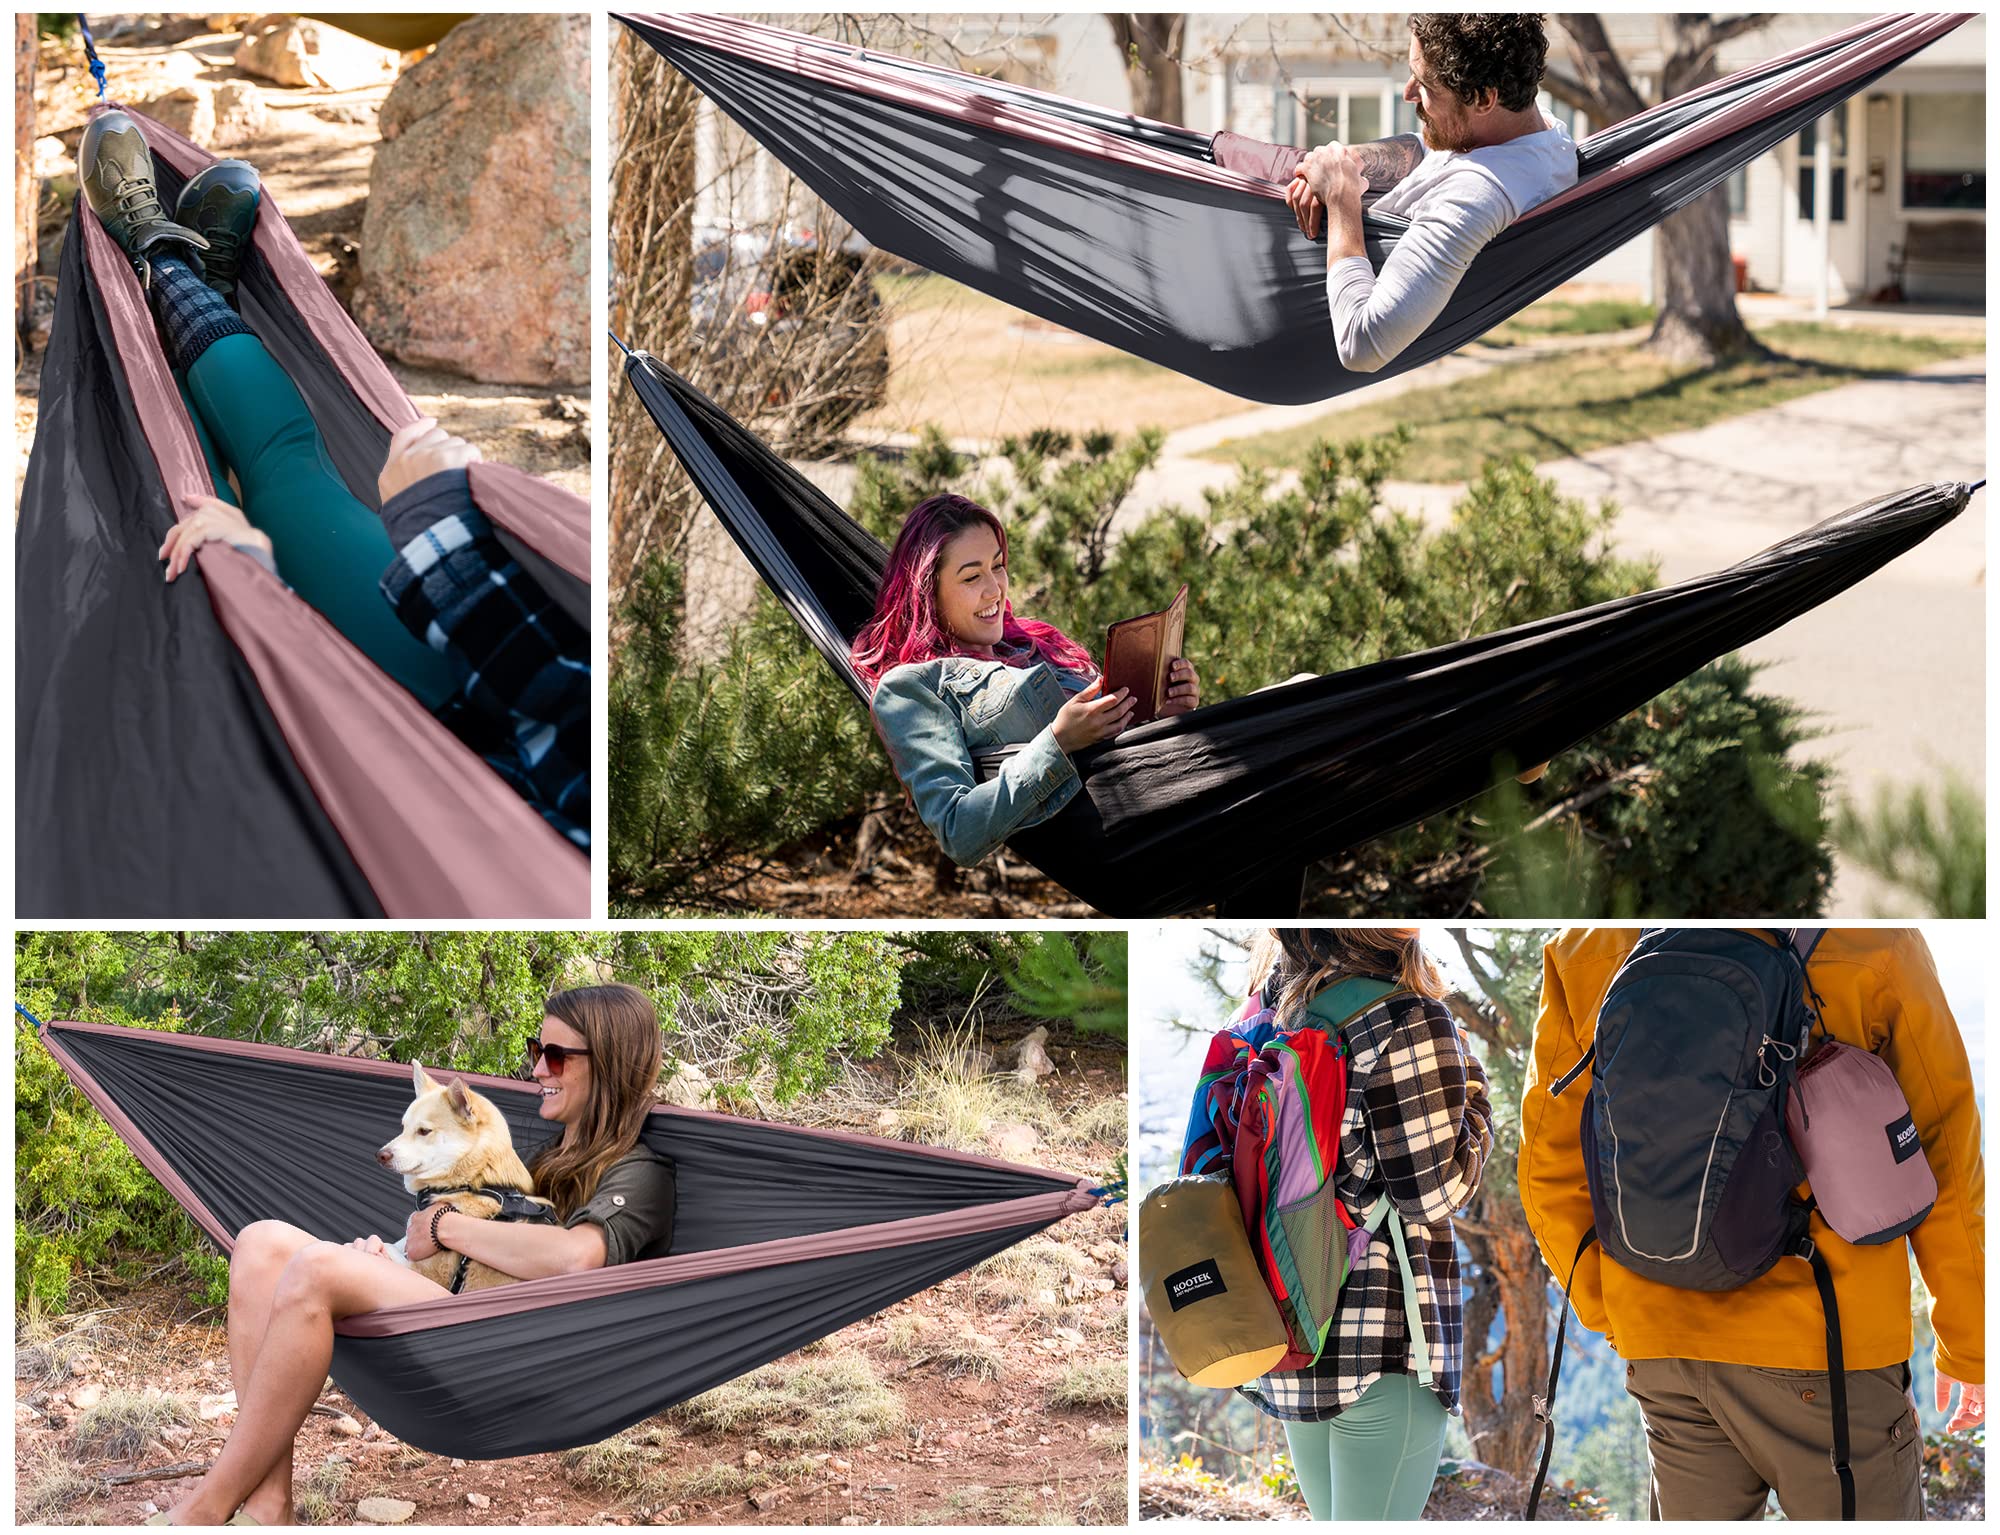 Kootek Camping Hammock Double Portable Hammocks with 2 Tree Straps, Lightweight Nylon Parachute Hammocks for Backpacking, Travel, Beach, Backyard, Patio, Hiking (Charcoal Grey & Rose, Large)